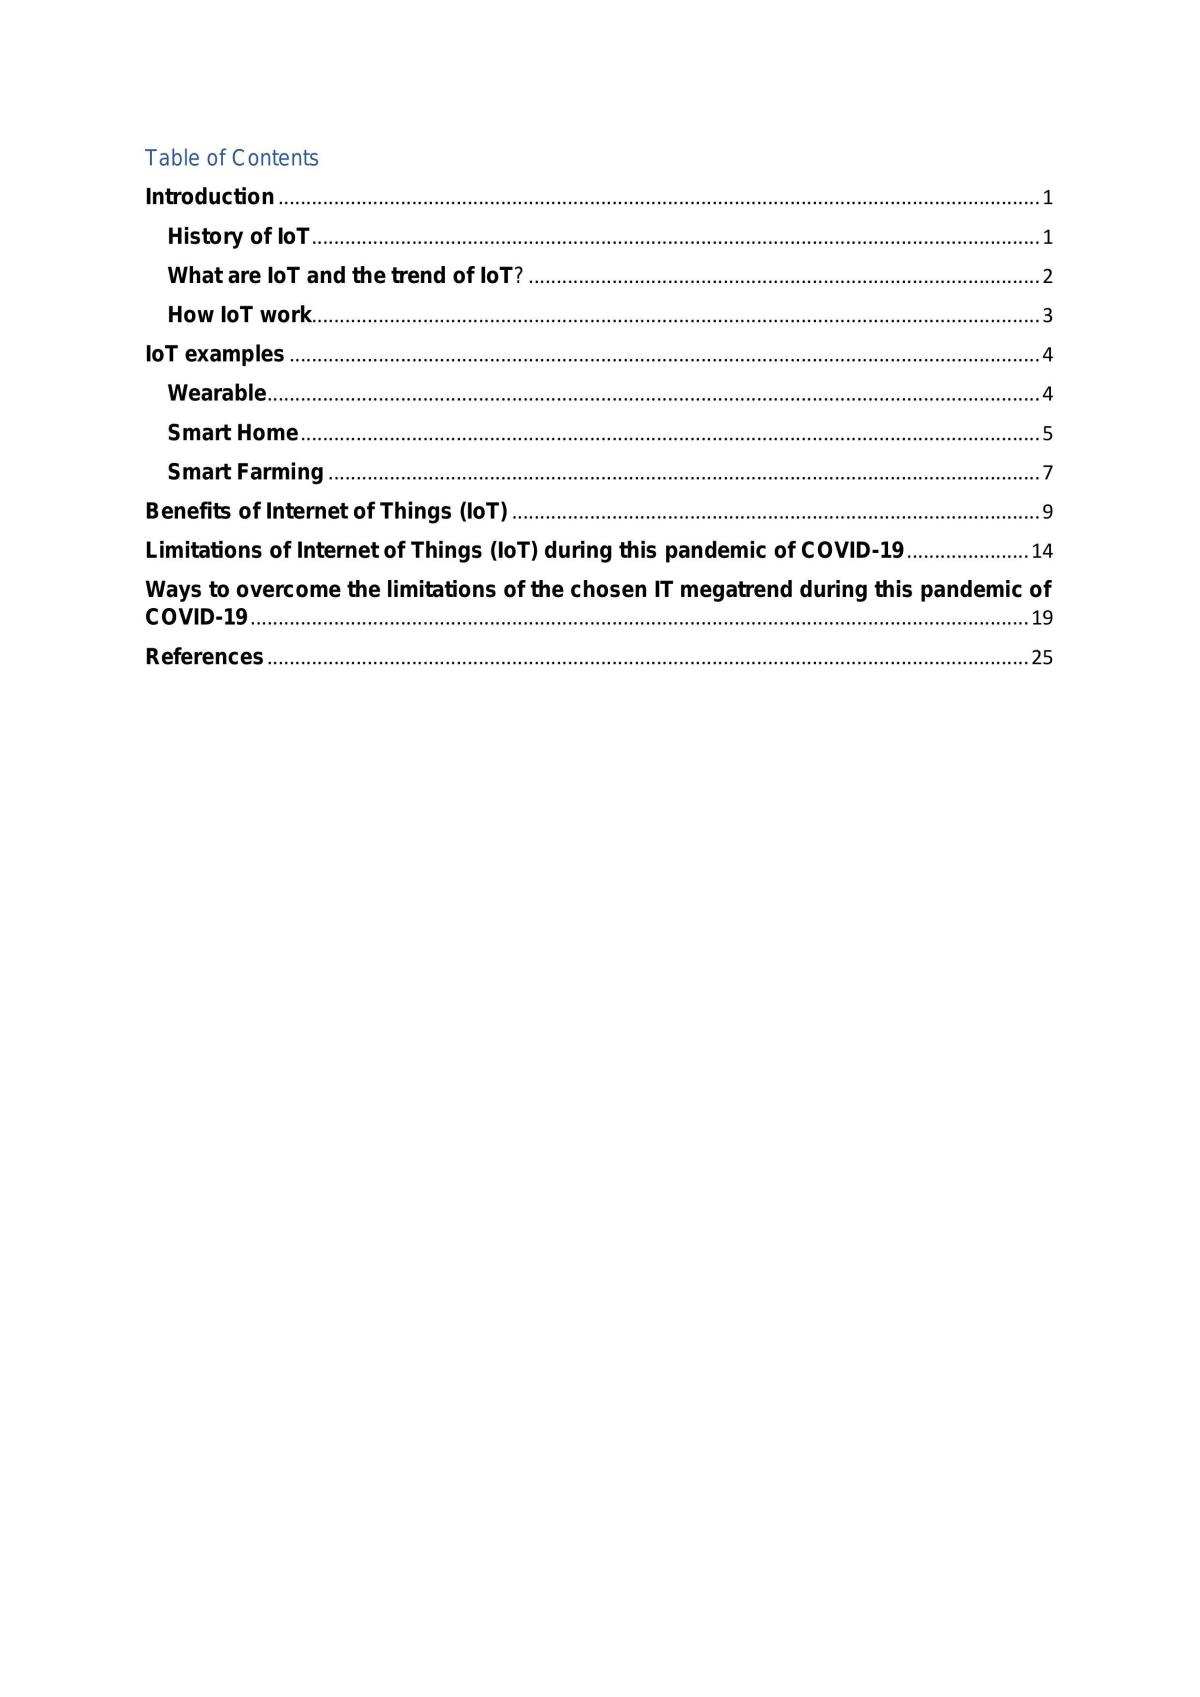 MI assessment - Page 1